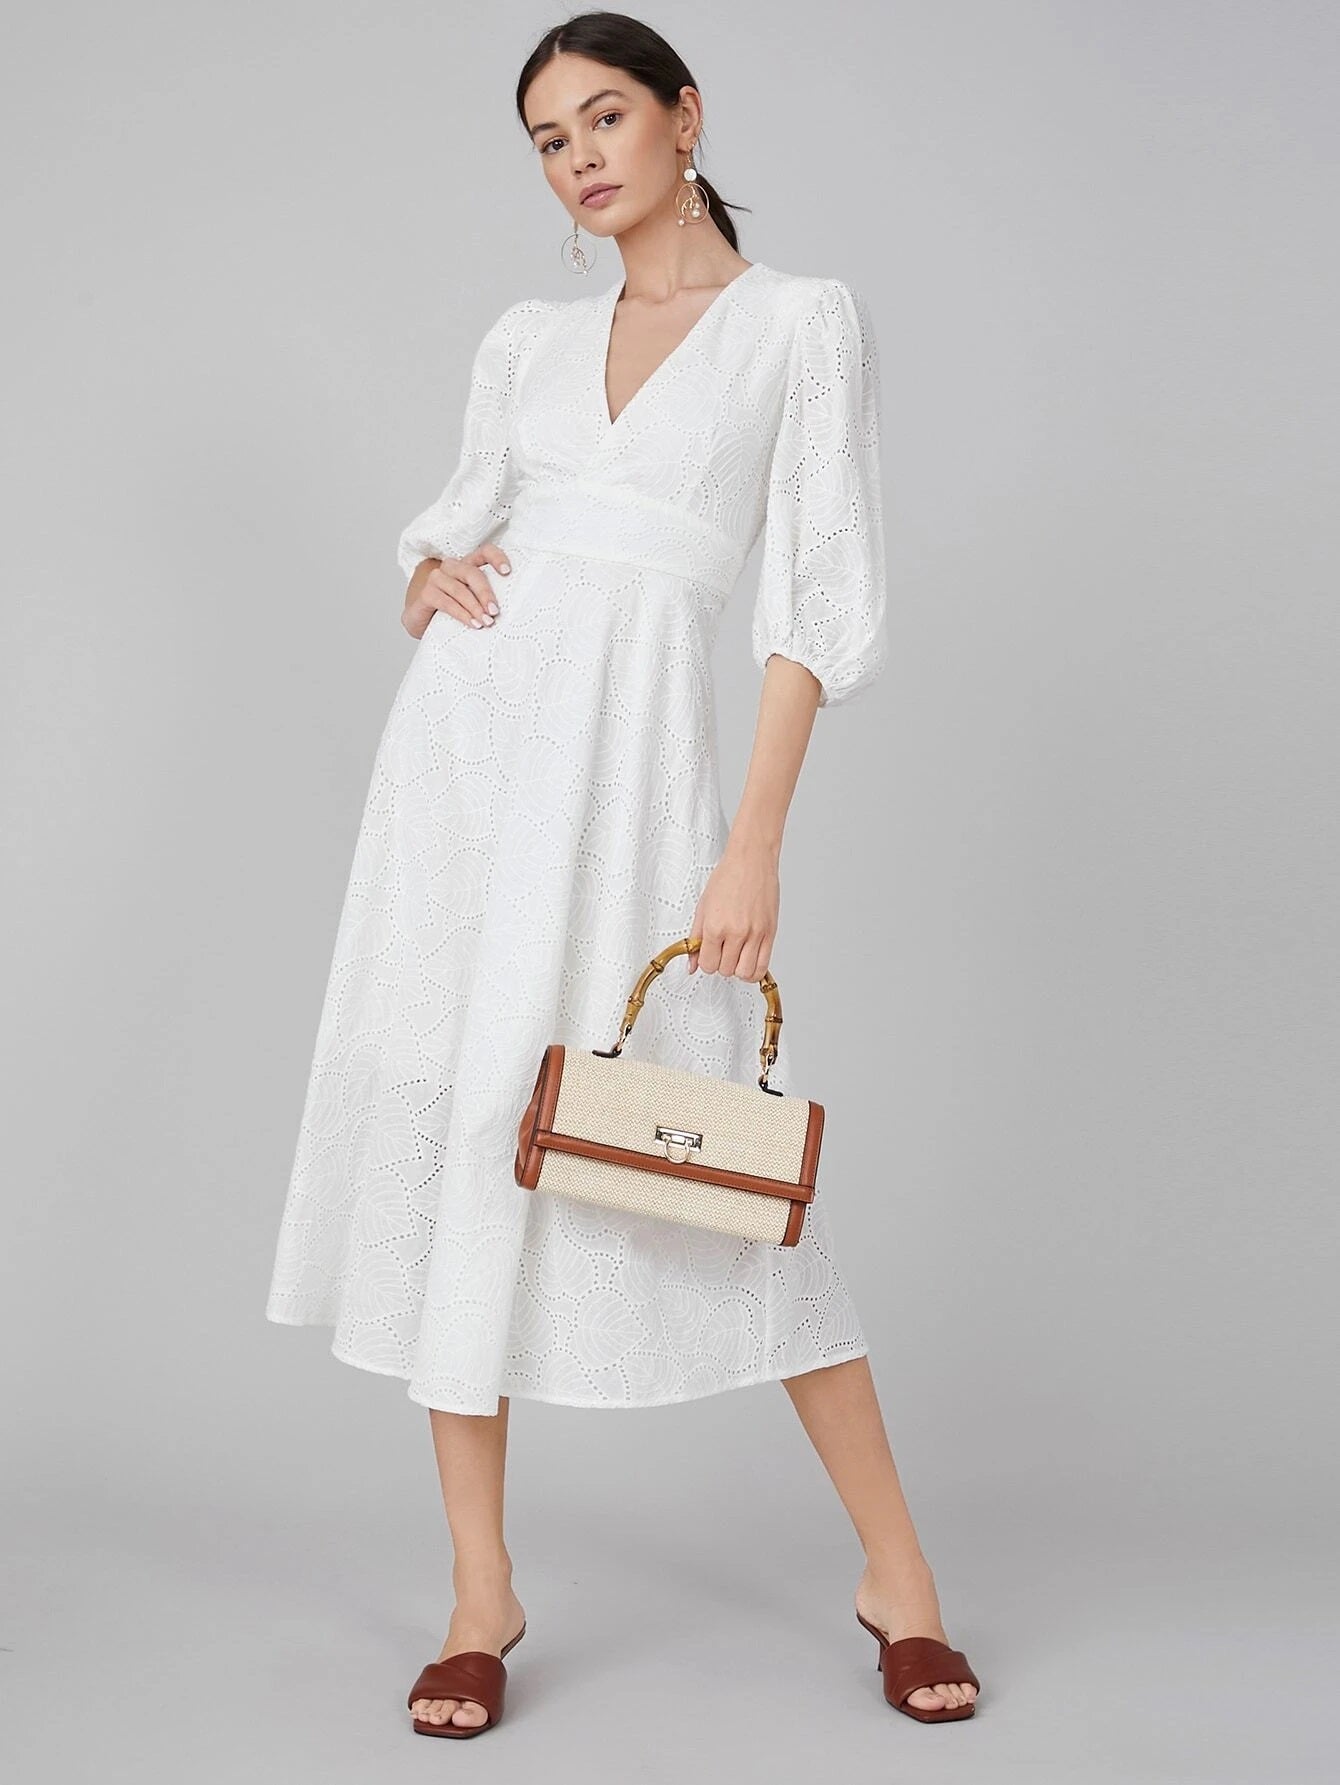 CM-ES230567 Women Elegant Seoul Style V-Neck 3/4 Sleeve Schiffy Flowy A-Line Dress - White